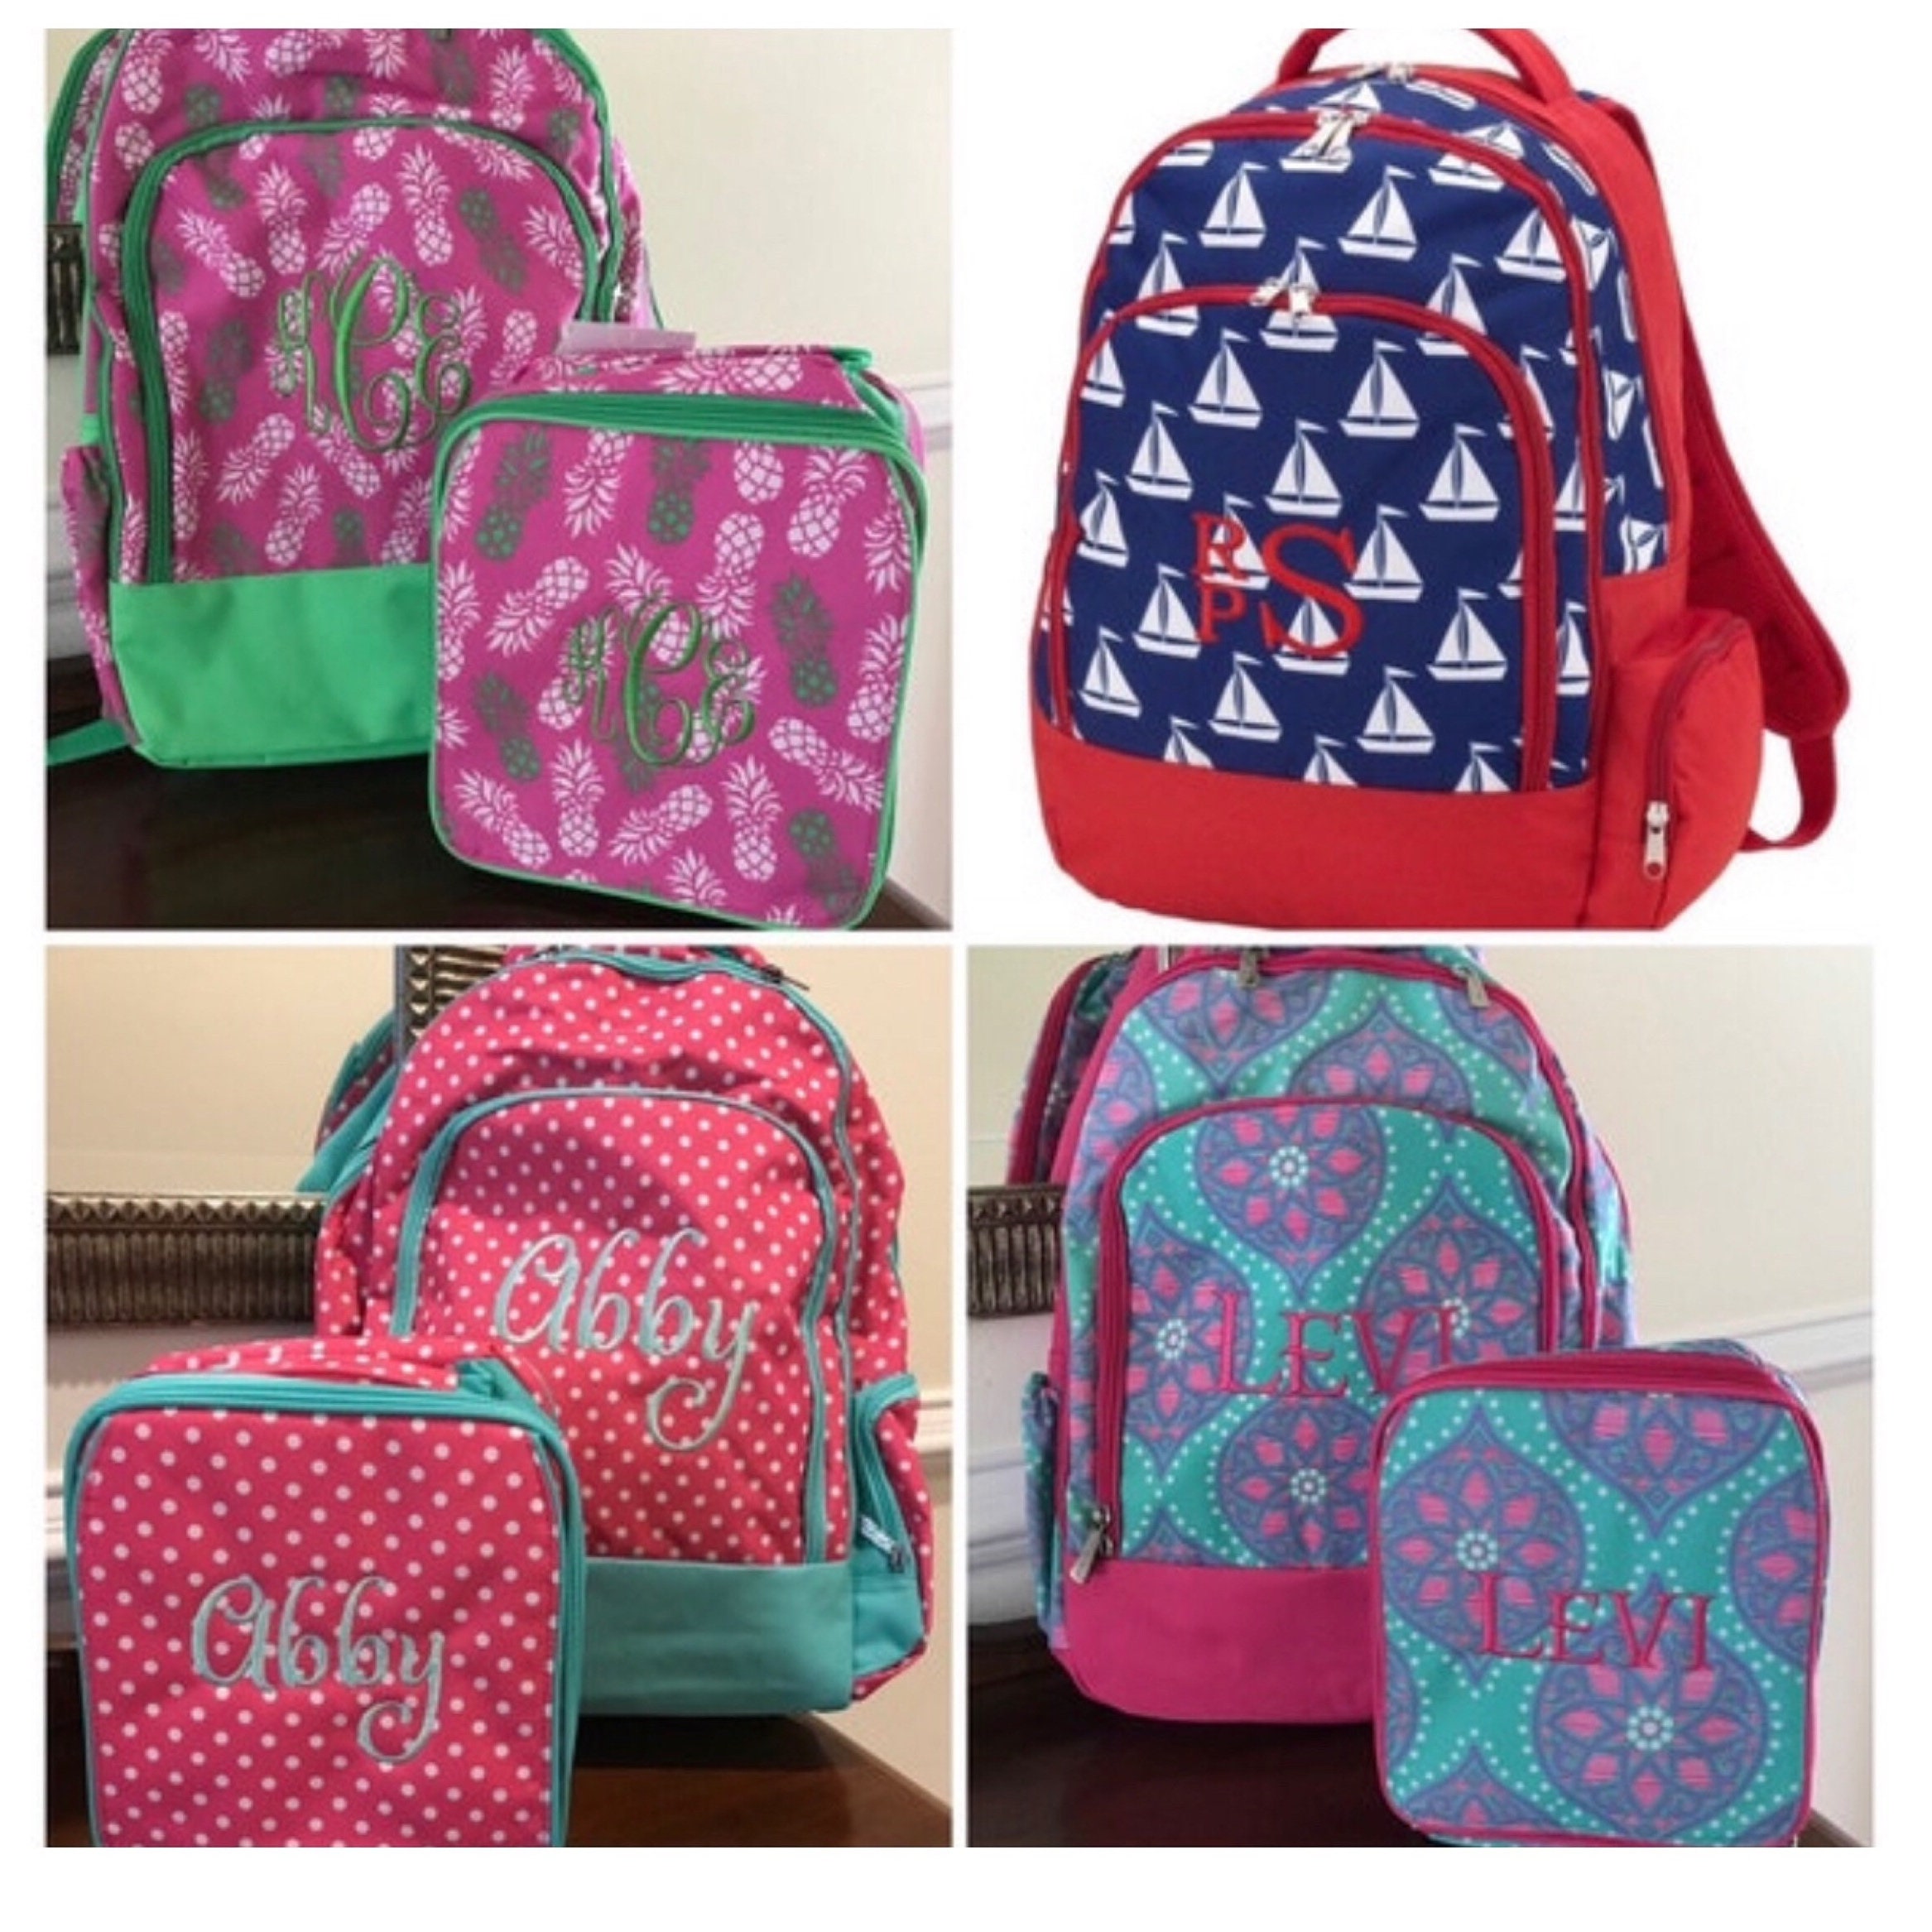 Monogrammed School Backpacks, Personalized Backpacks for Girls